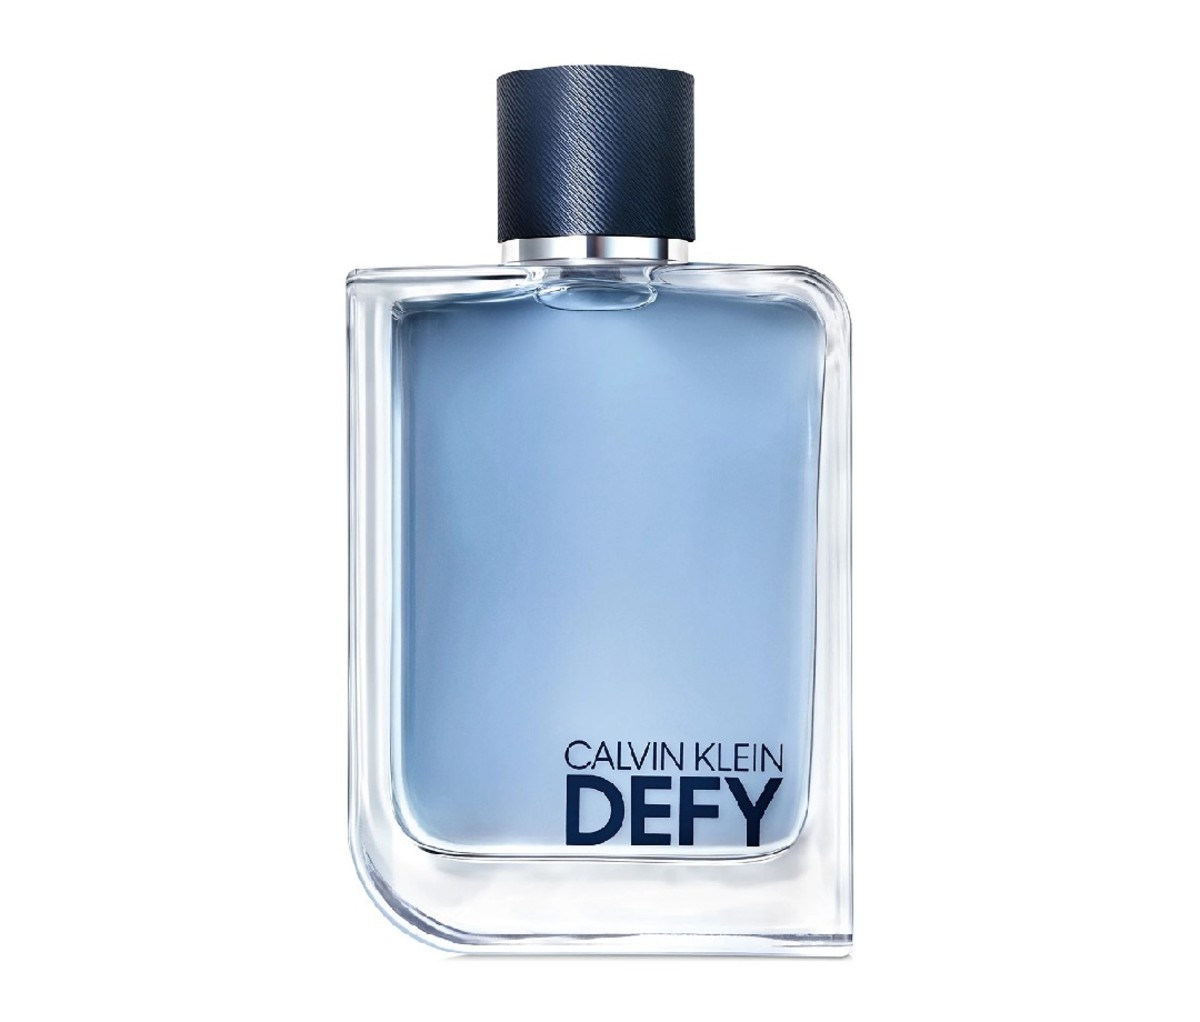 A bottle of Calvin Klein Defy: The Best Fragrance and Cologne for Men